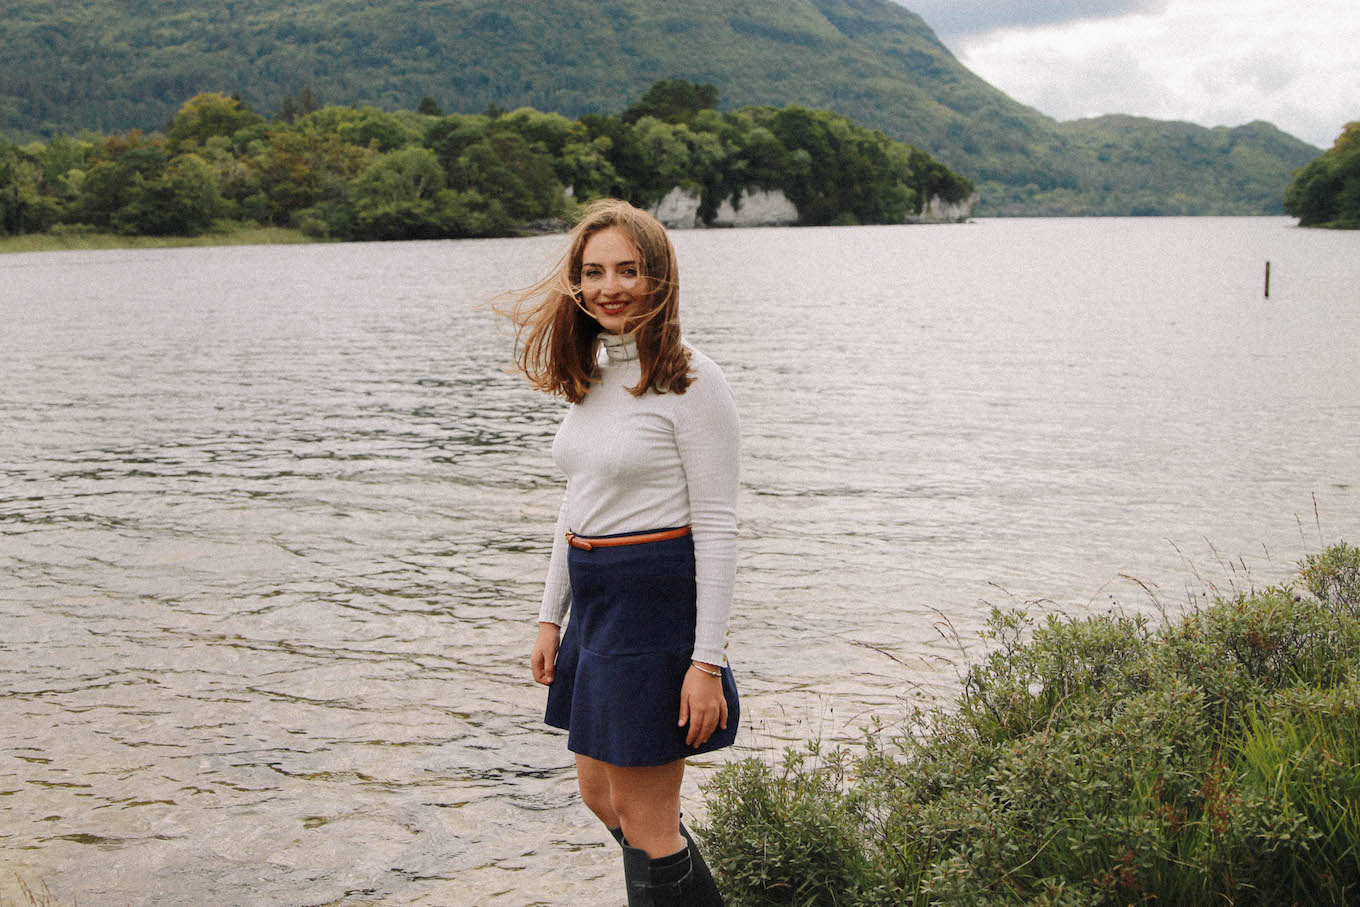 Ring of Kerry, Ireland Travel Guide | The Coastal Confidence by Aubrey Yandow